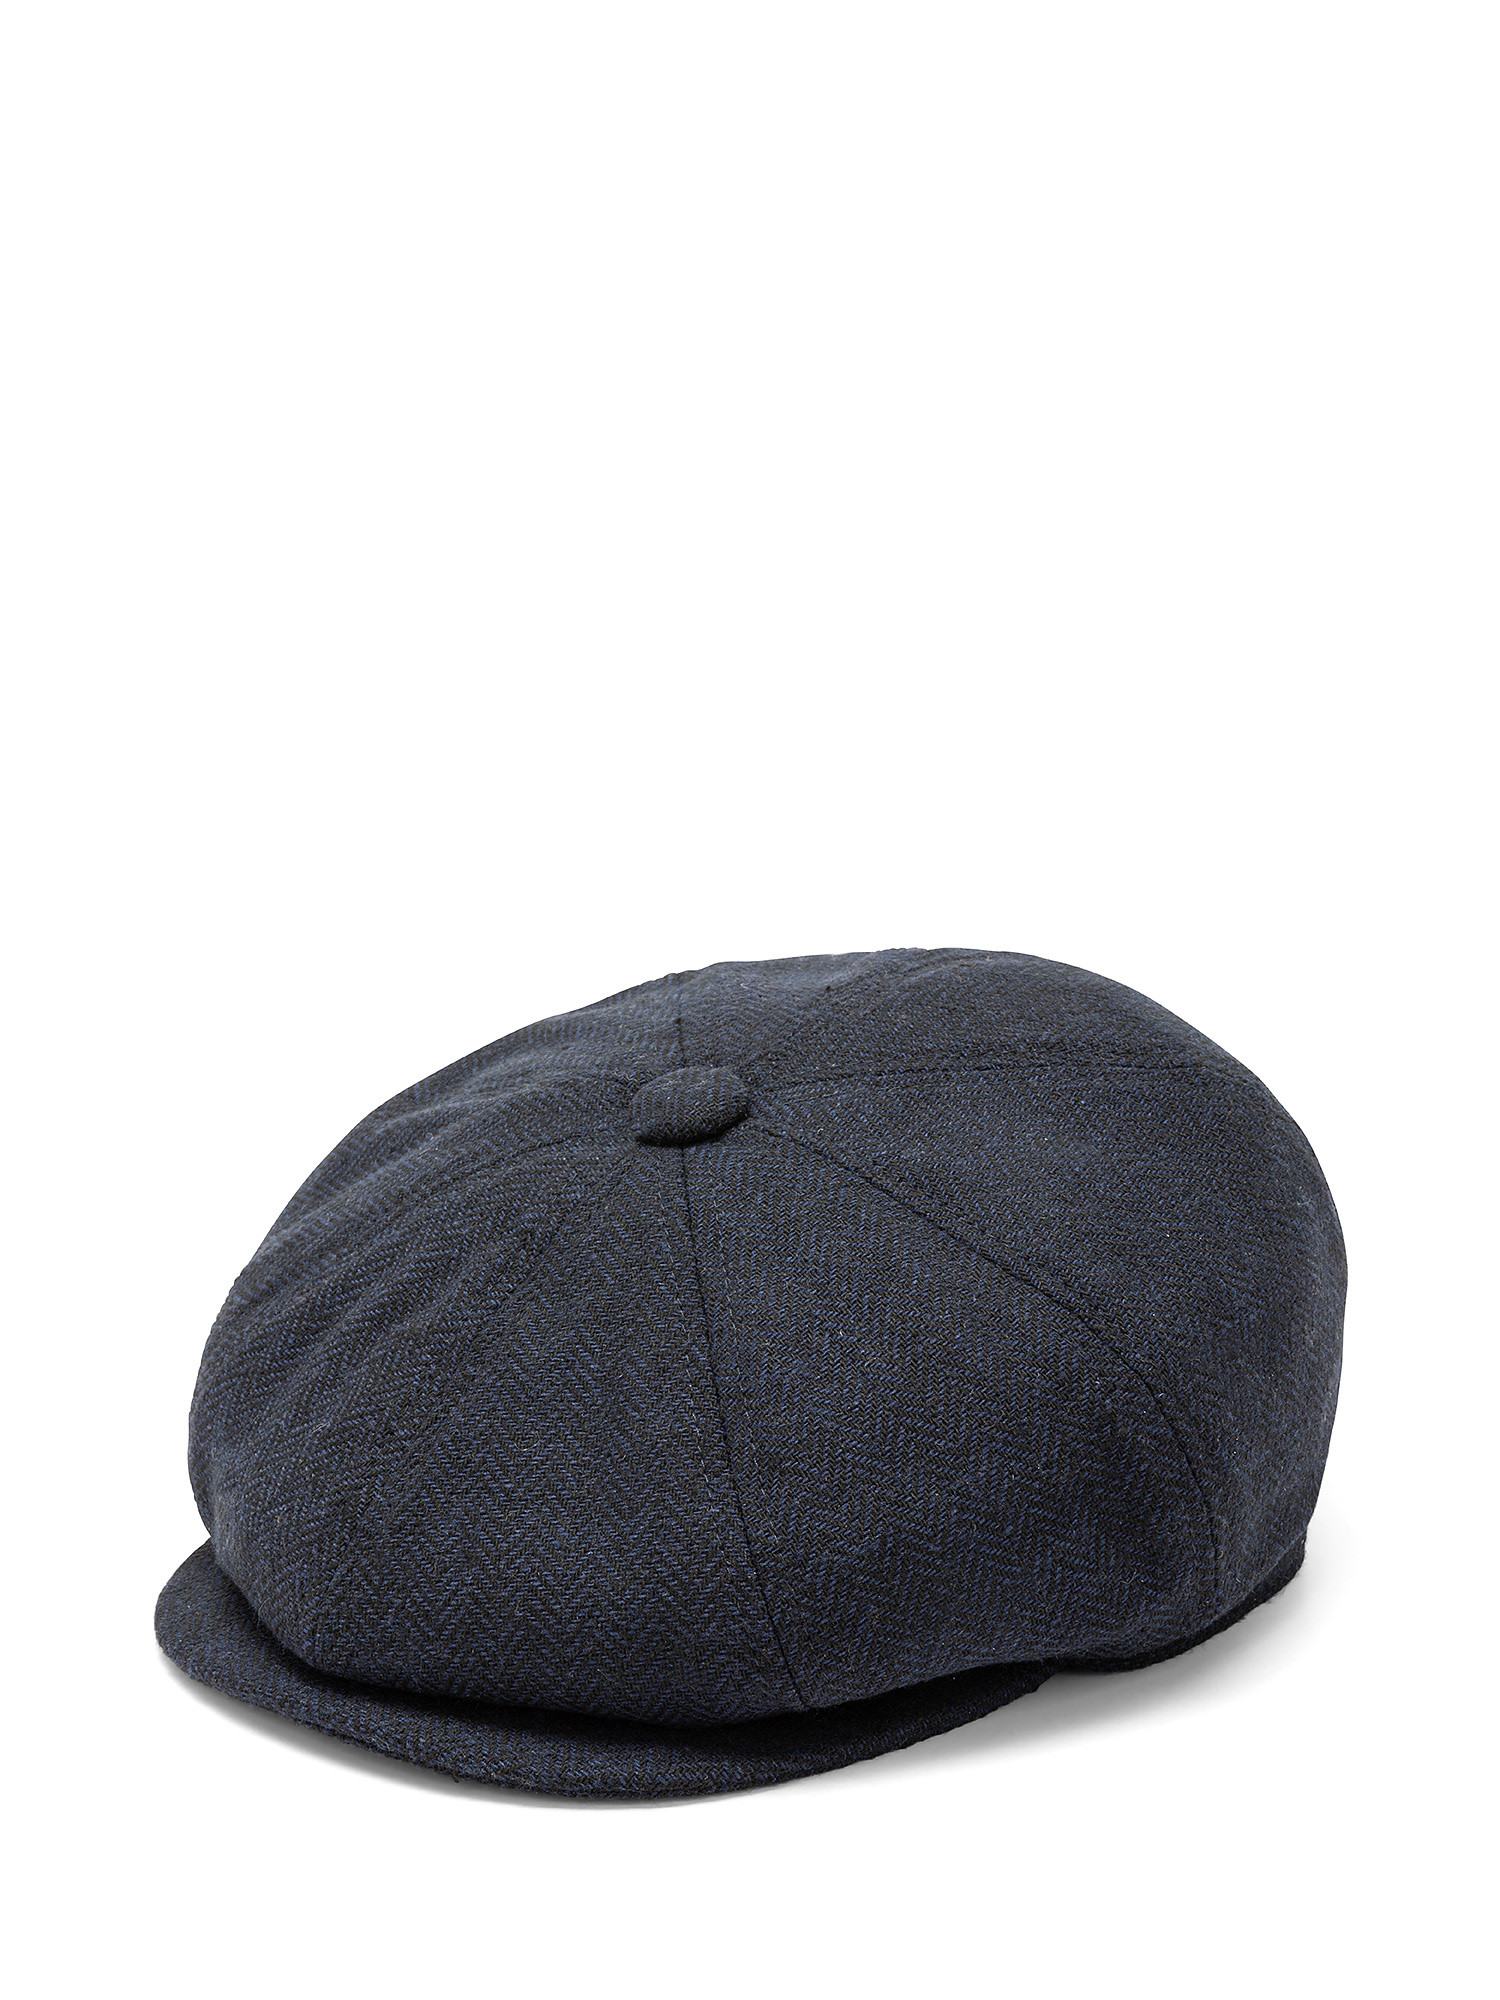 New boy cap, Dark Blue, large image number 0